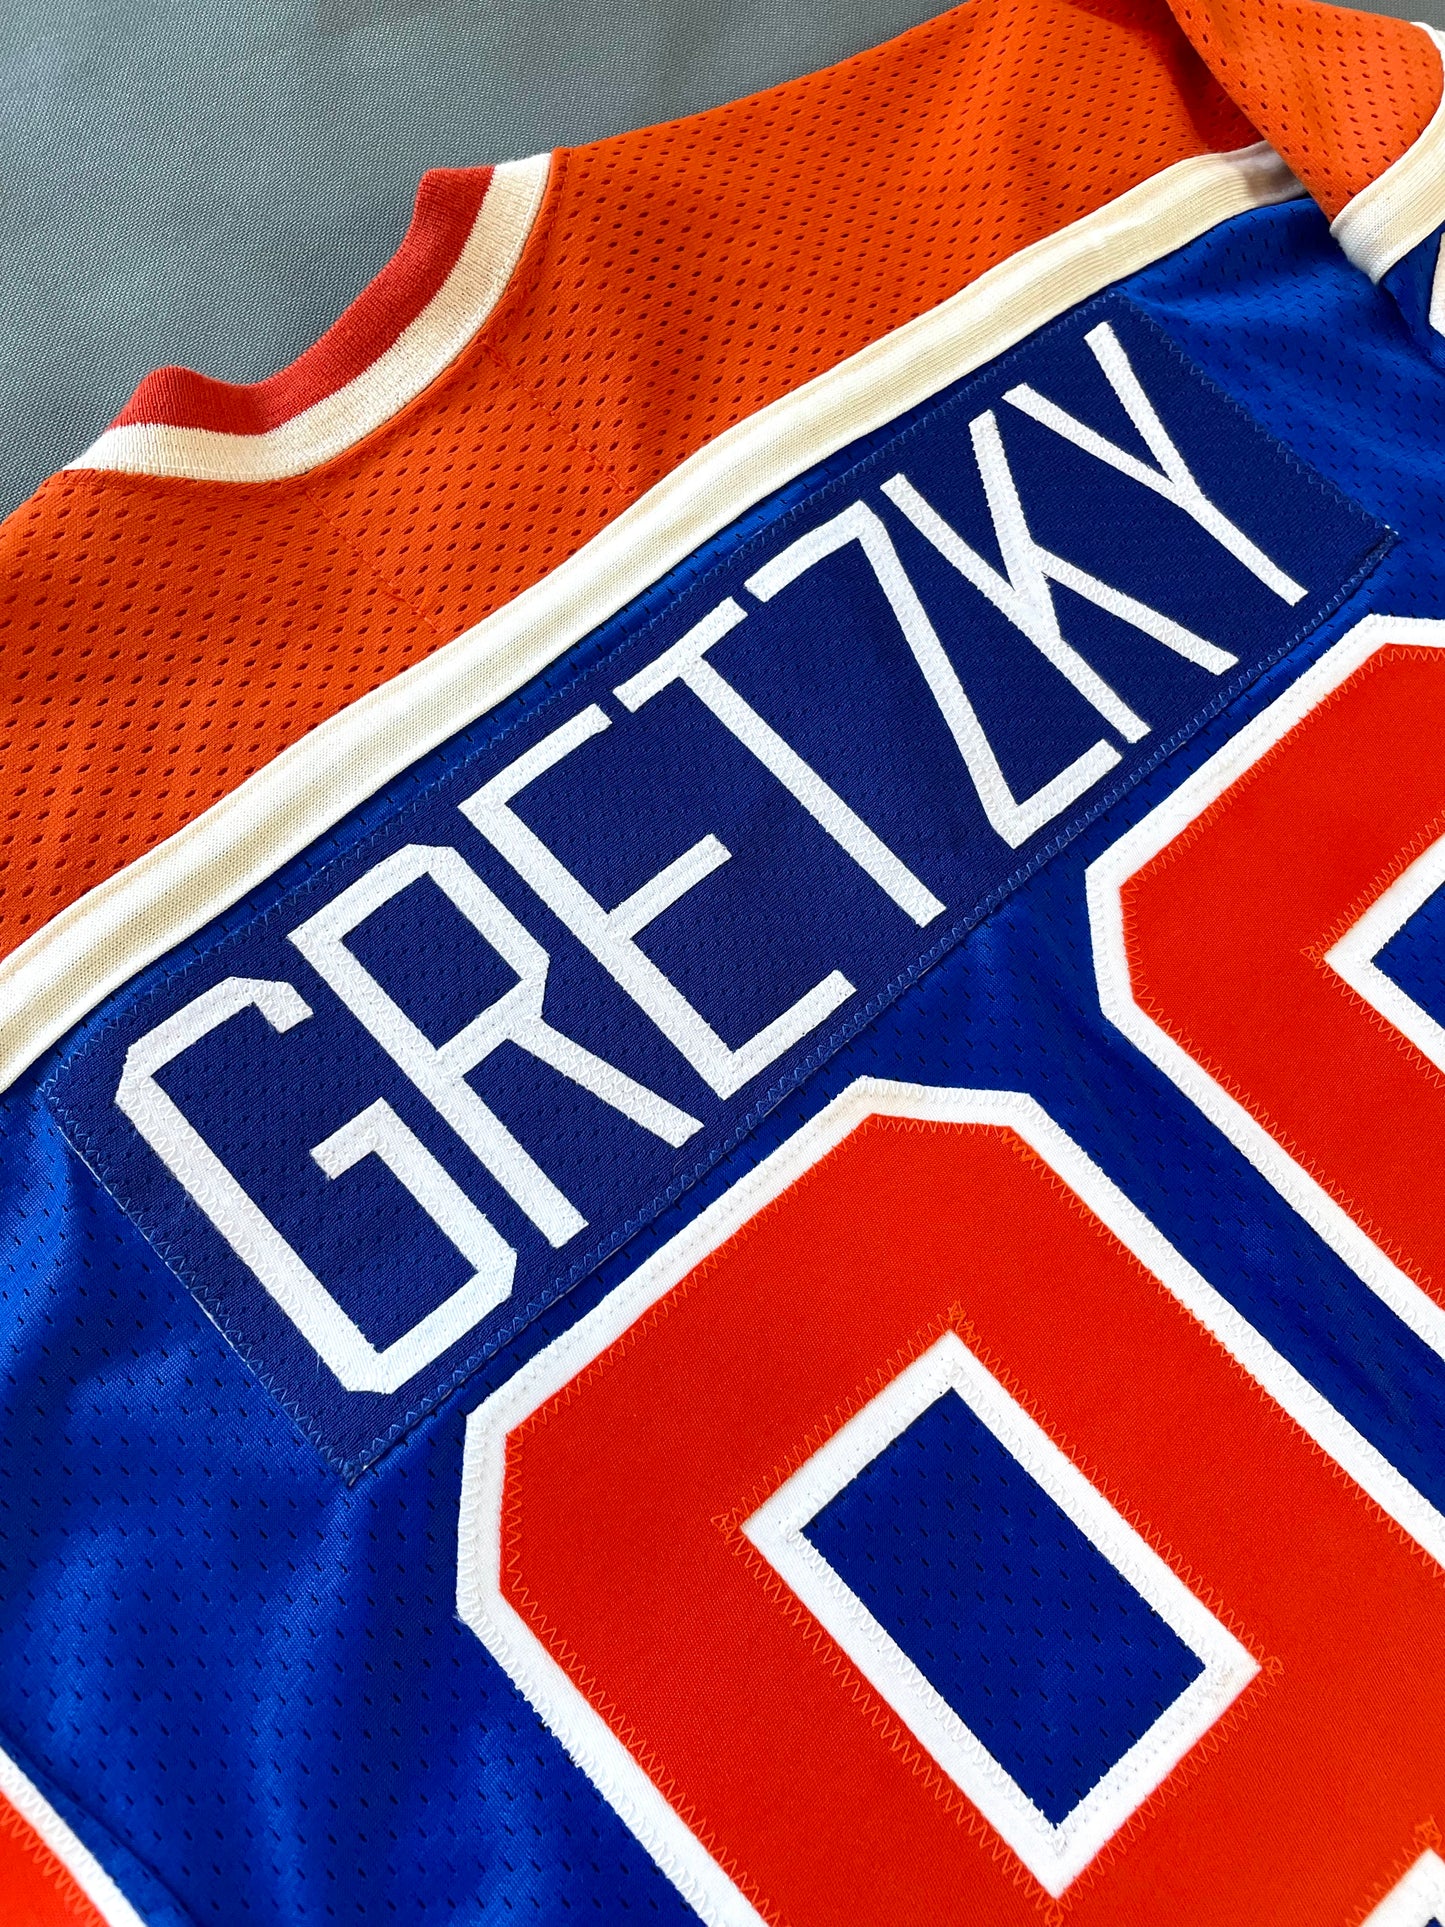 Edmonton Oilers 1980-1982 Wayne Gretzky Hockey Jersey (36/Small)